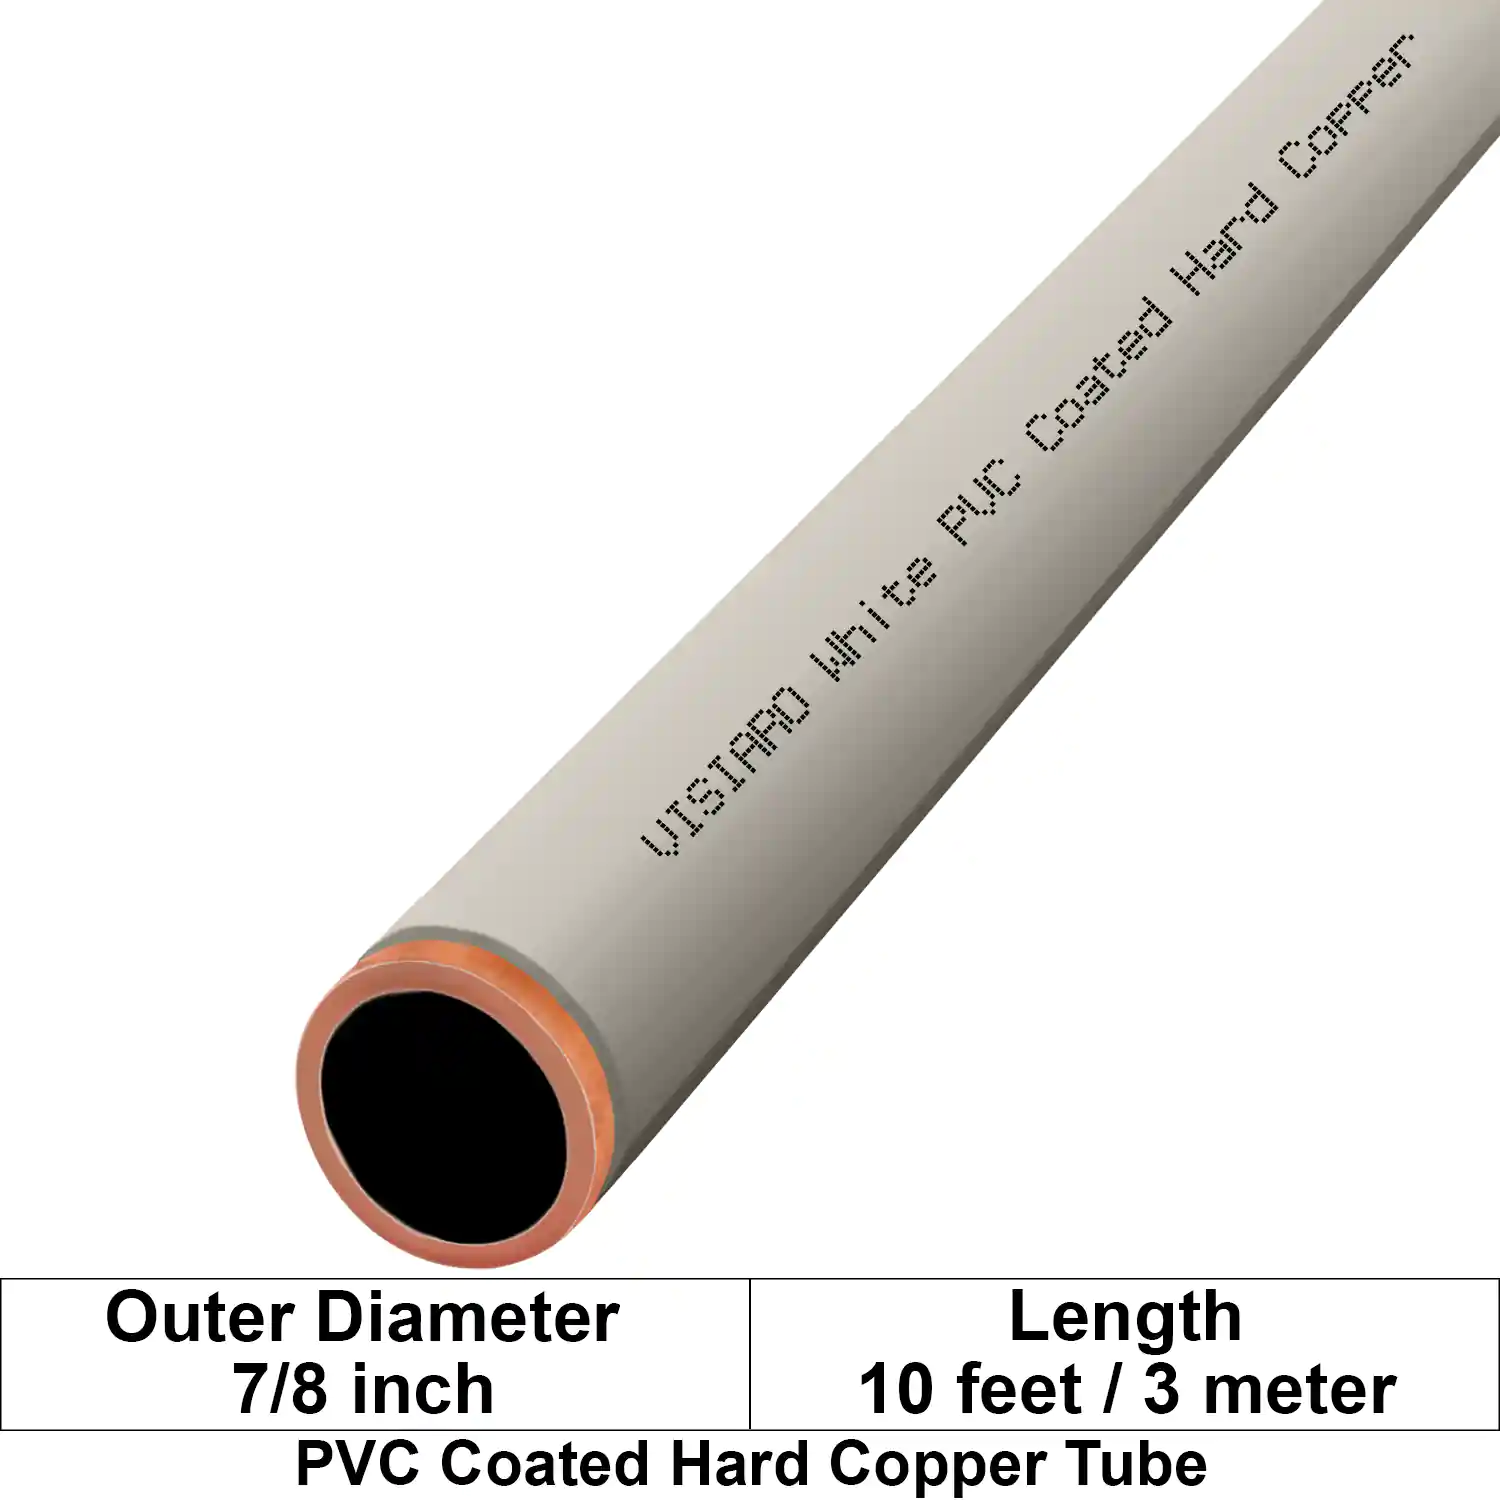 Visiaro White PVC Coated Hard Copper Tube 10ft long Outer Diameter - 7/8 inch